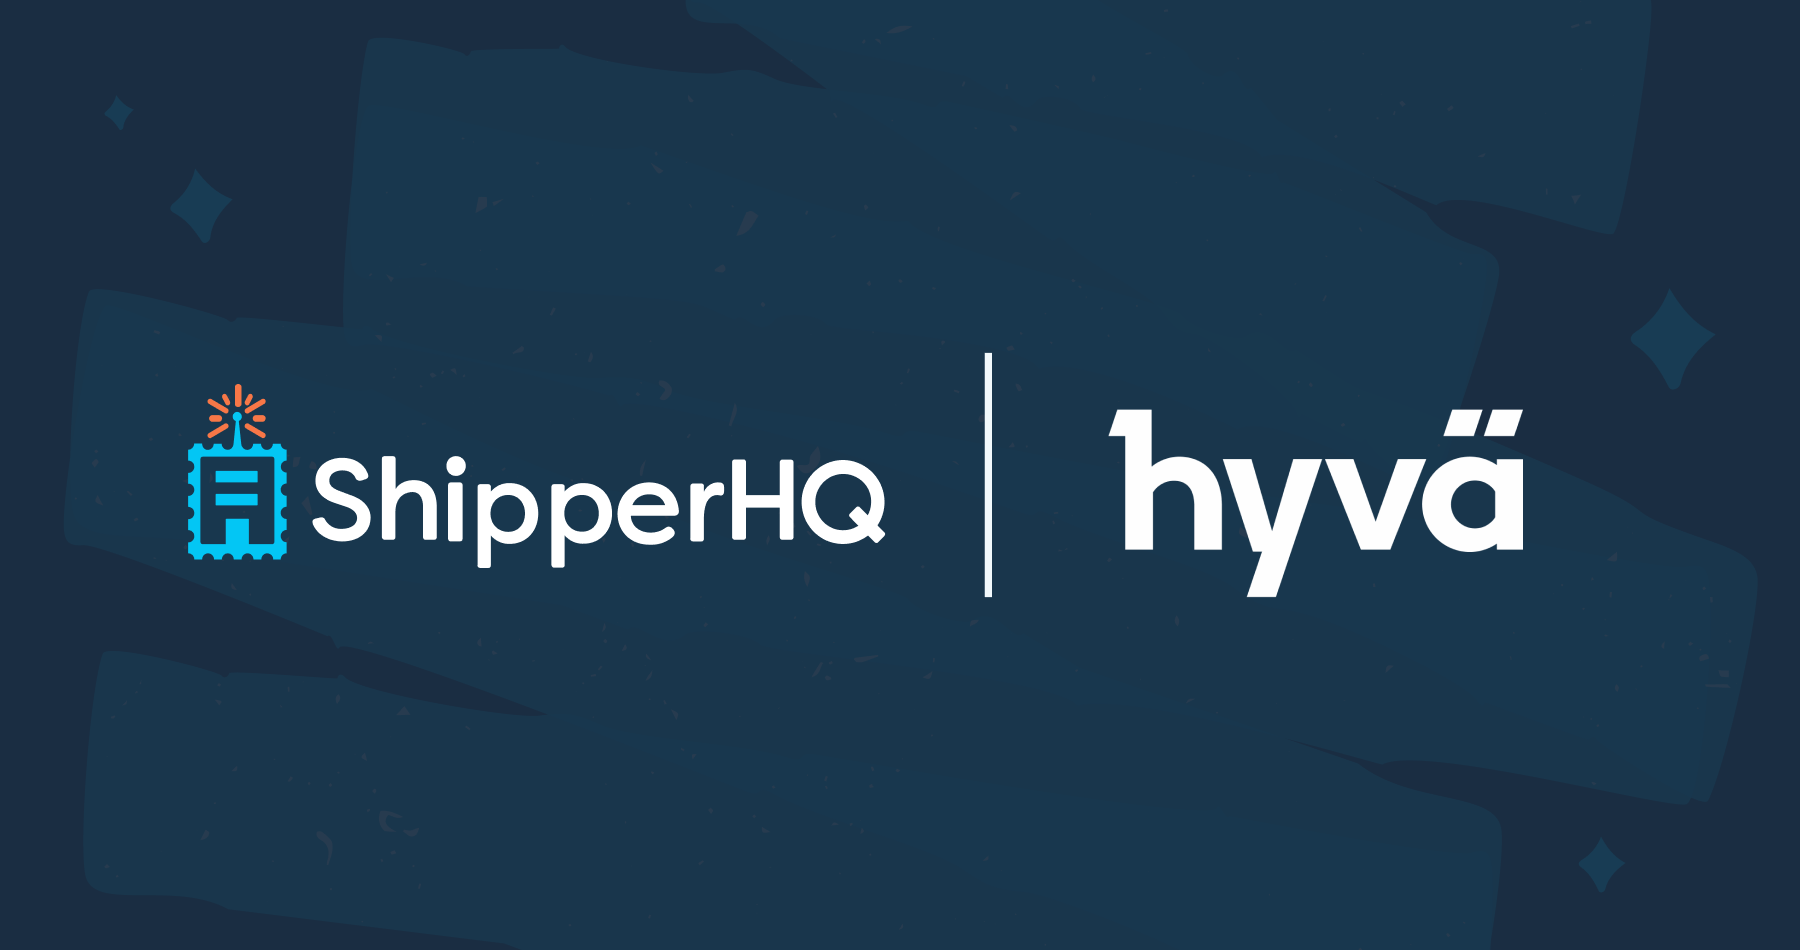 ShipperHQ Announces Official Partnership with Hyvä